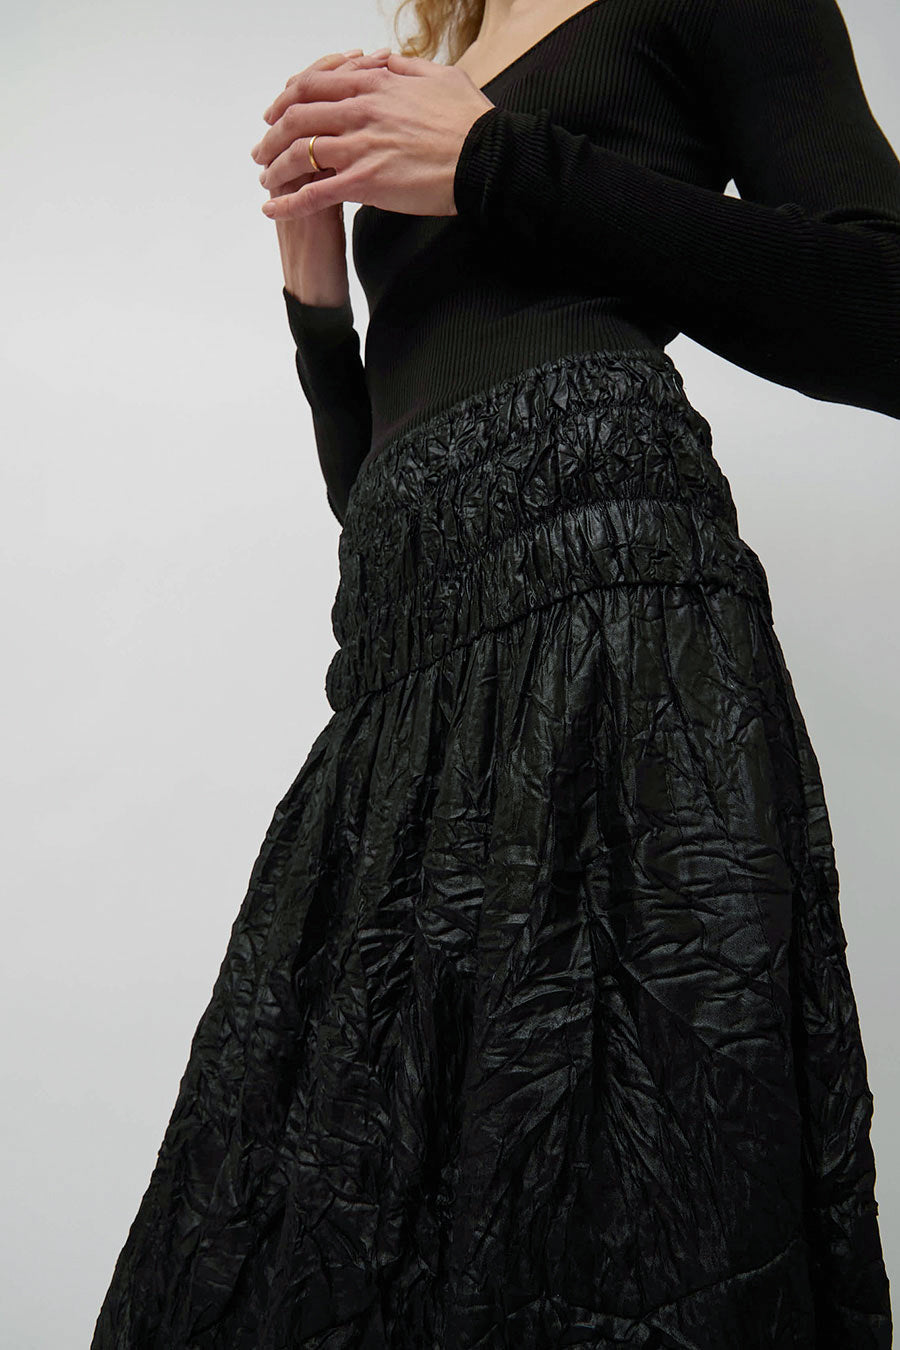 OpéraSPORT Gloria Gathered Skirt in Black